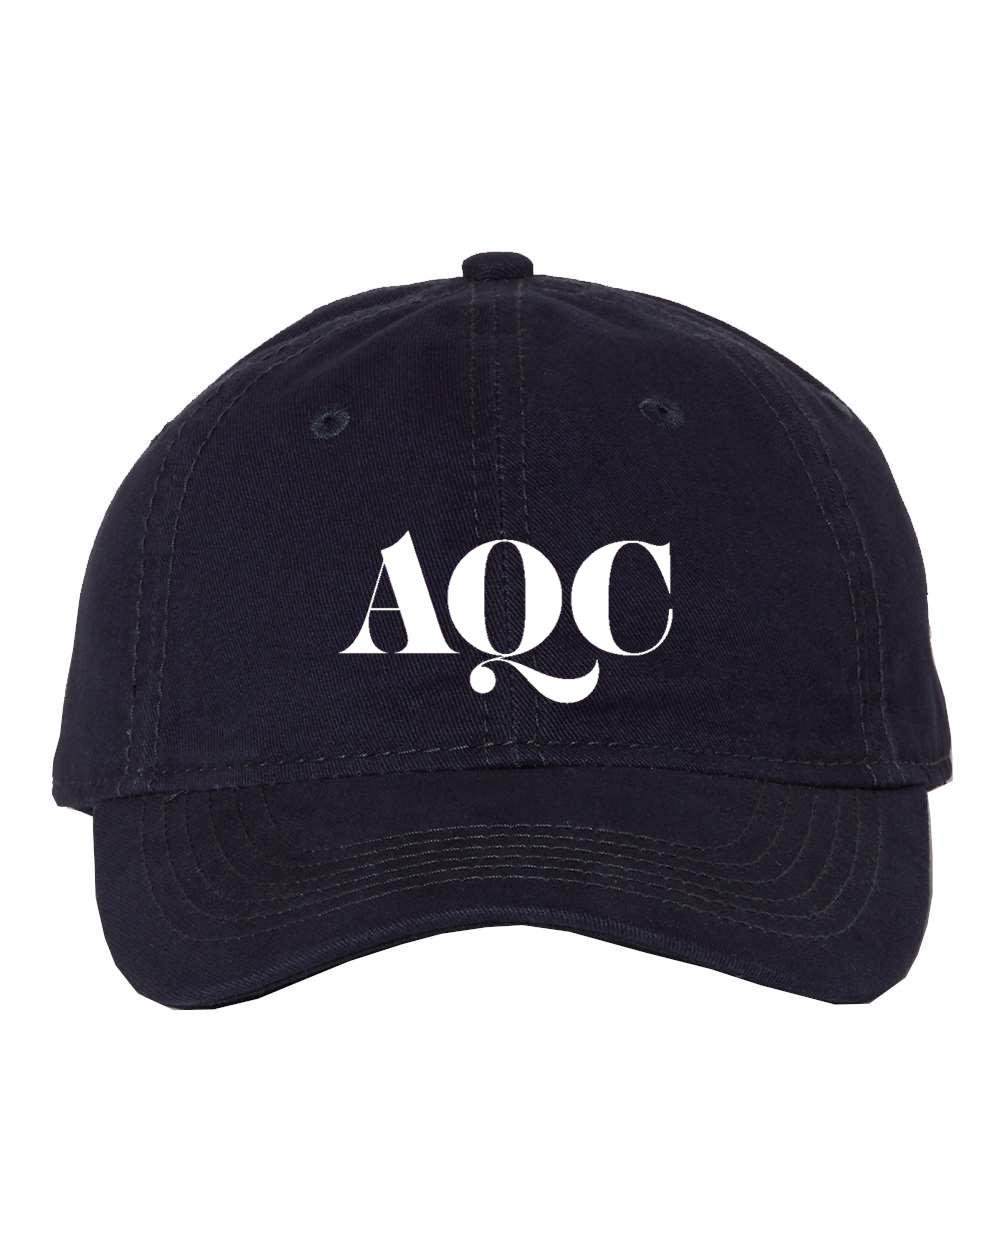 Relaxed dad hat - AQC Salon